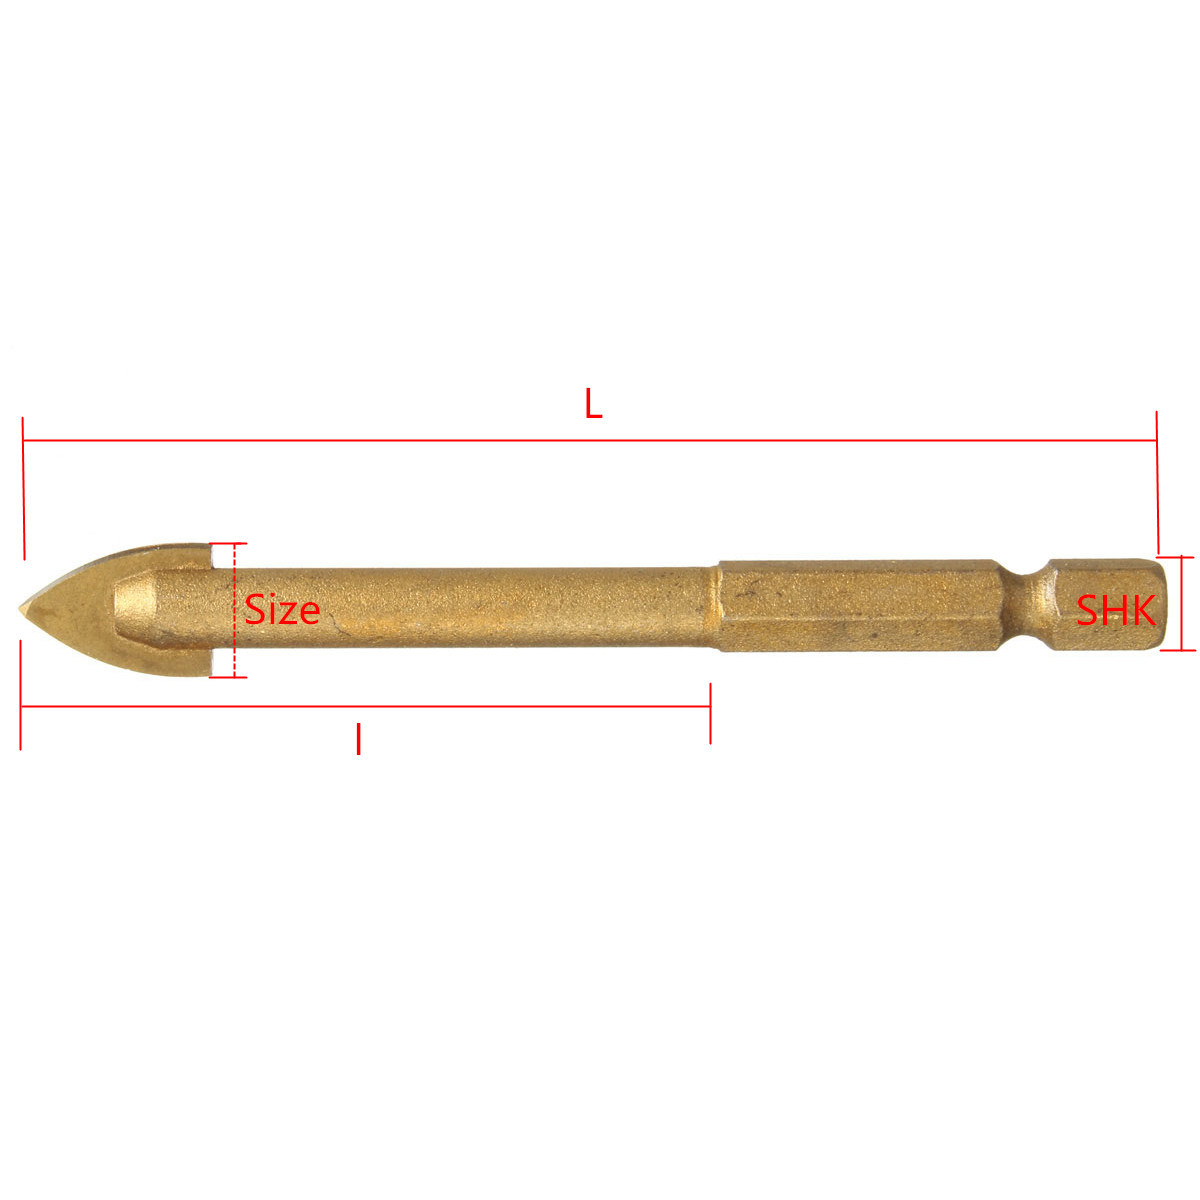 6-12mm-Carbide-Tile-Spear-Head-Drill-Bit-Glass-Drill-Hole-Tool-Tungsten-Carbide-Tipped-Bit-978952-1